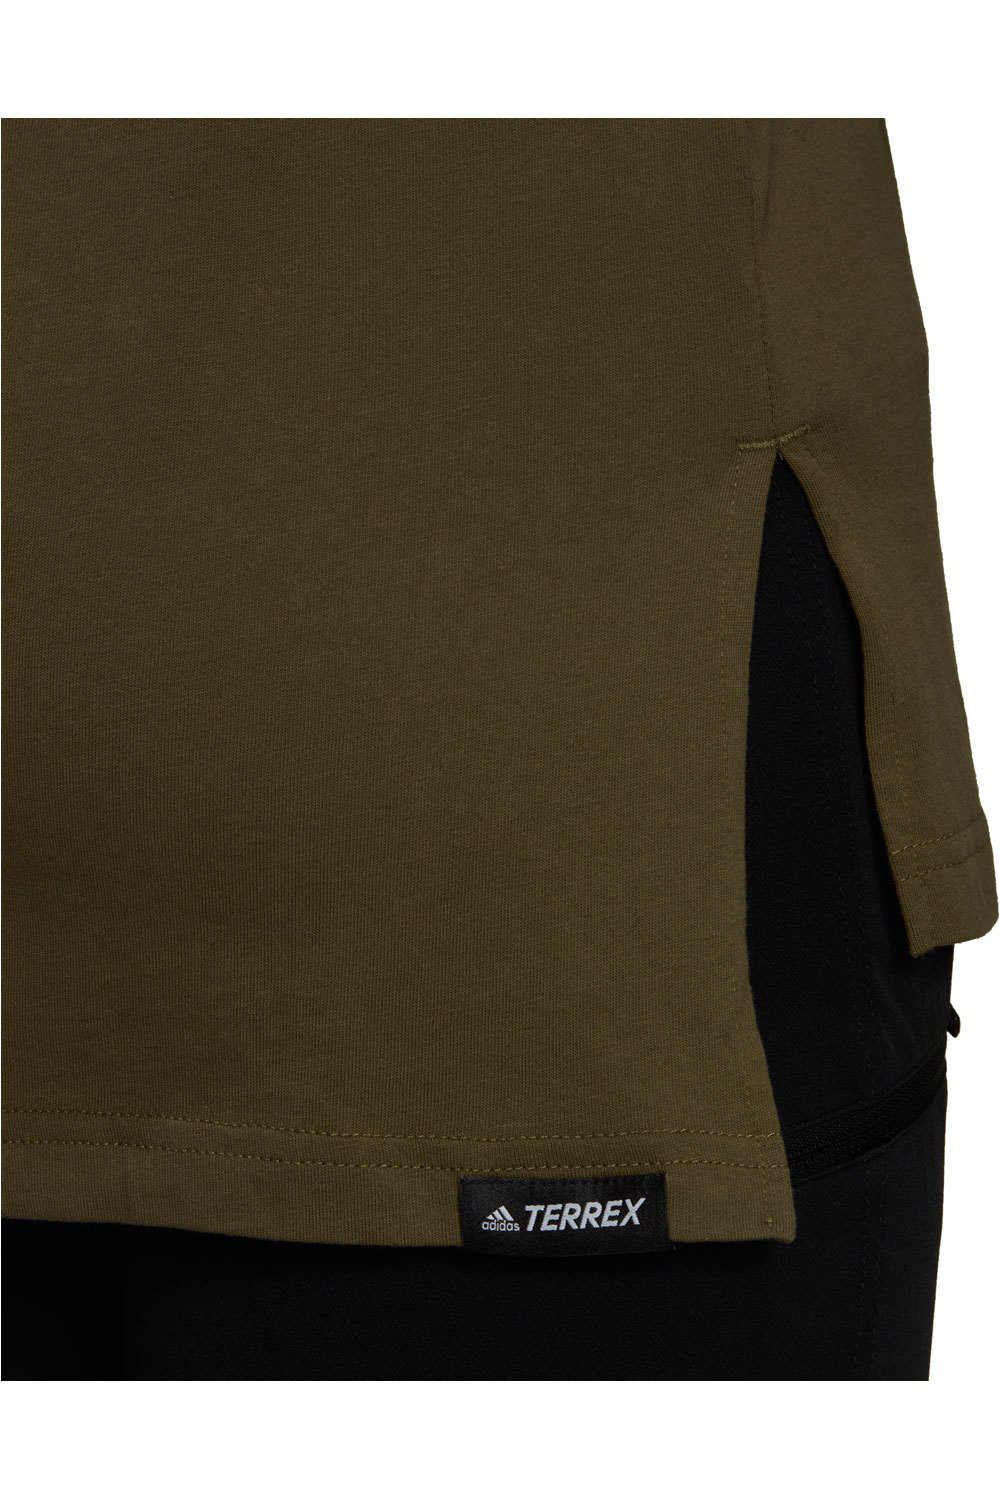 adidas camiseta montaña manga corta mujer Terrex Patch Mountain Graphic 03